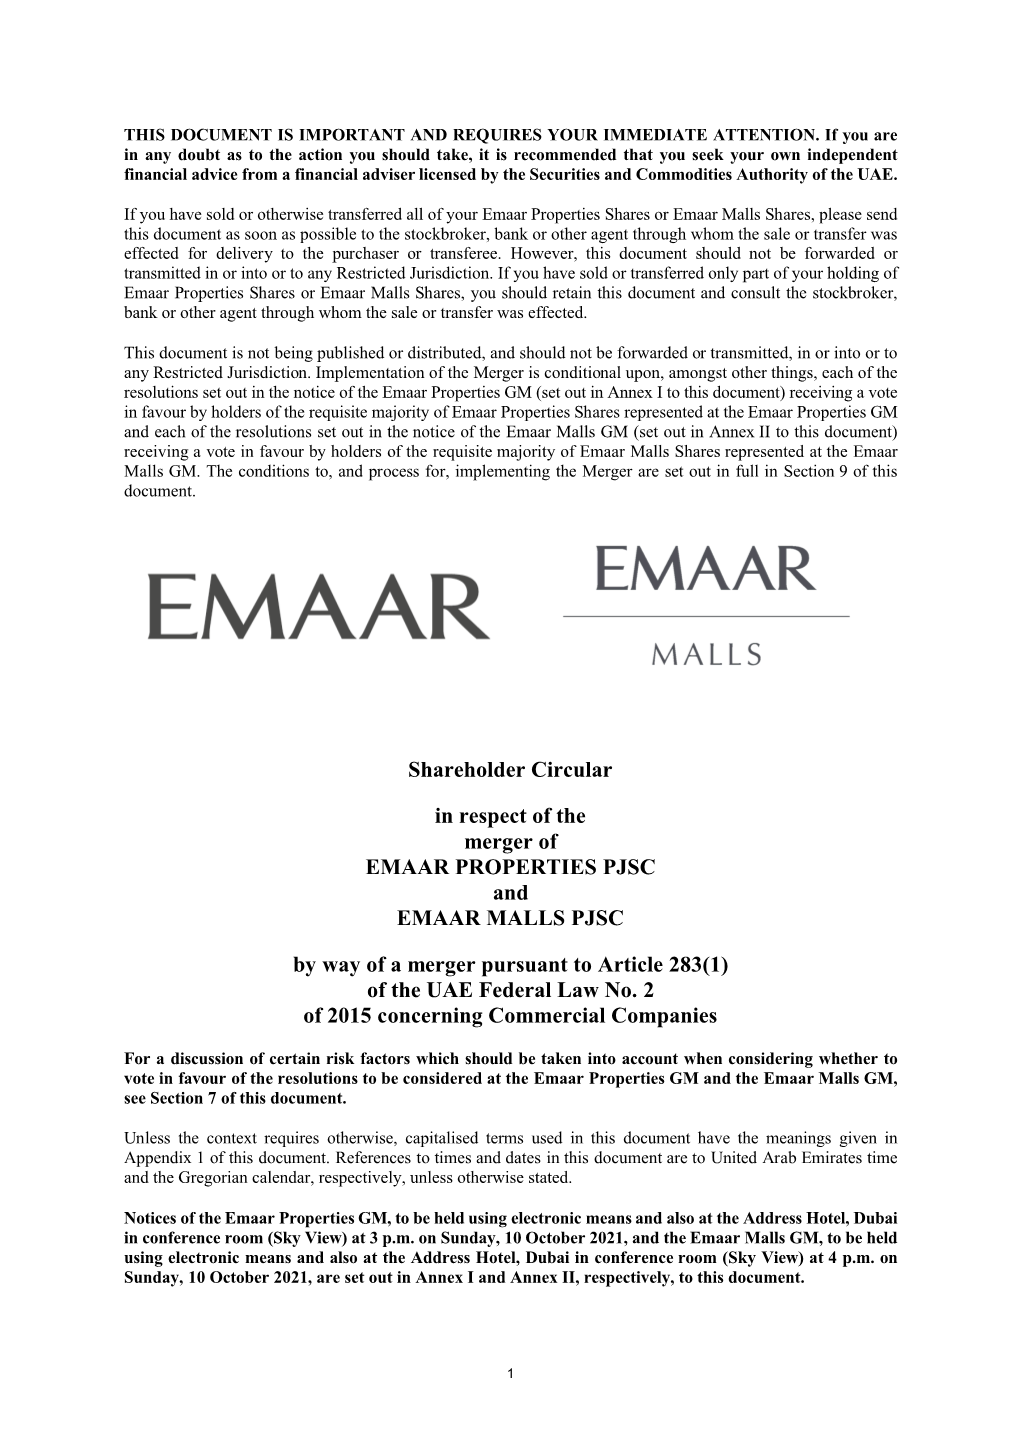 Shareholder Circular in Respect of the Merger of EMAAR PROPERTIES